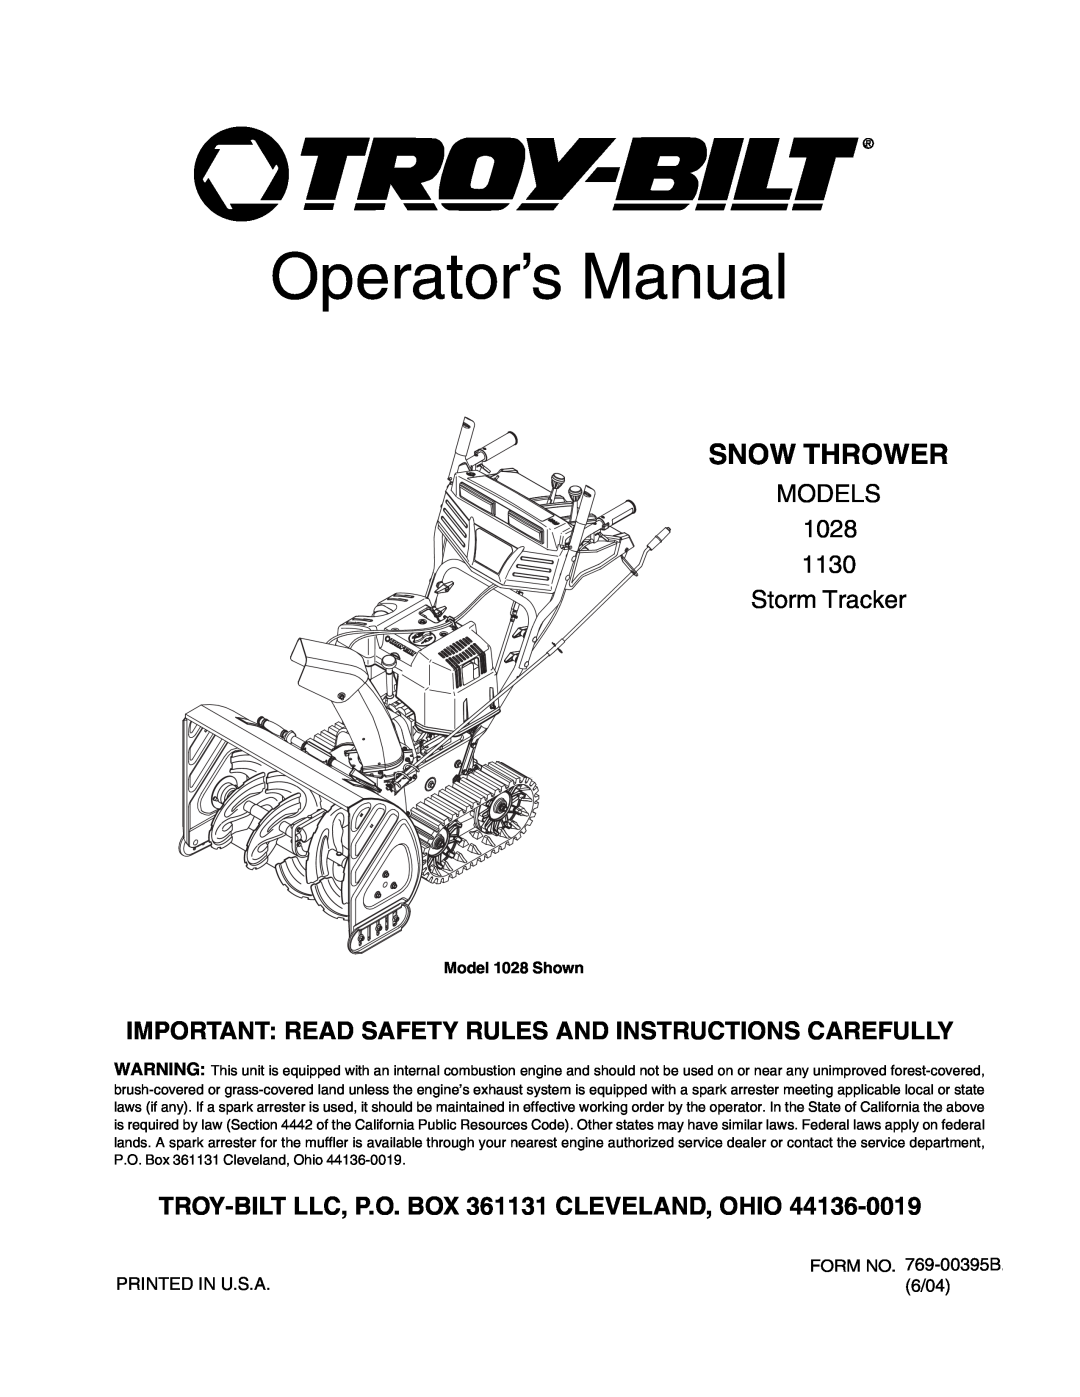 Troy-Bilt 1130 manual Operator’s Manual, Snow Thrower, MODELS 1028 Storm Tracker 